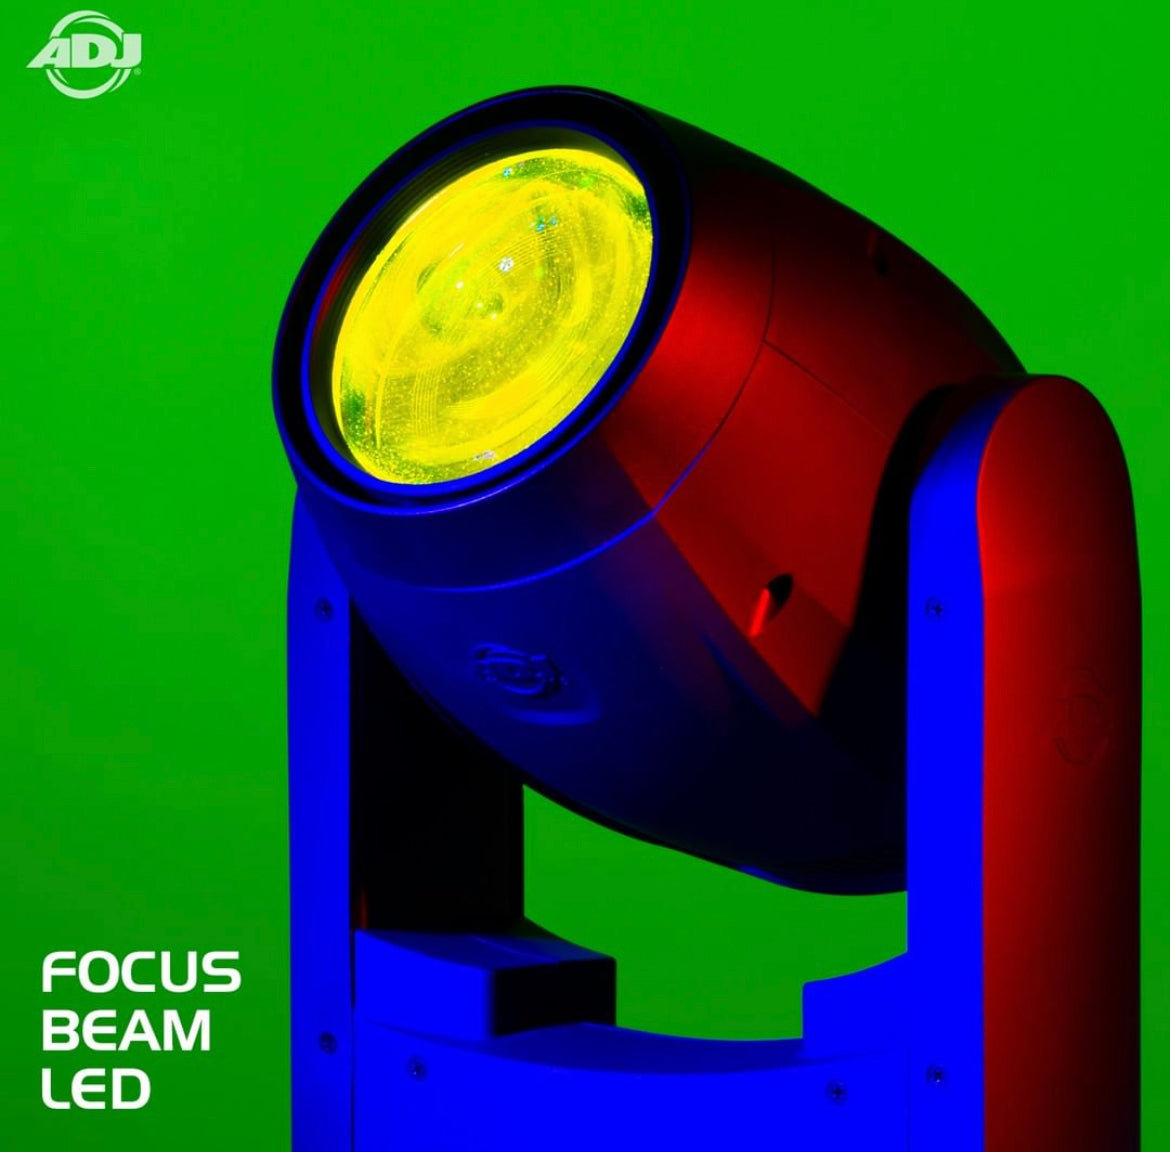 American DJ ADJ Focus Beam LED 80W Moving Head [B-STOCK]